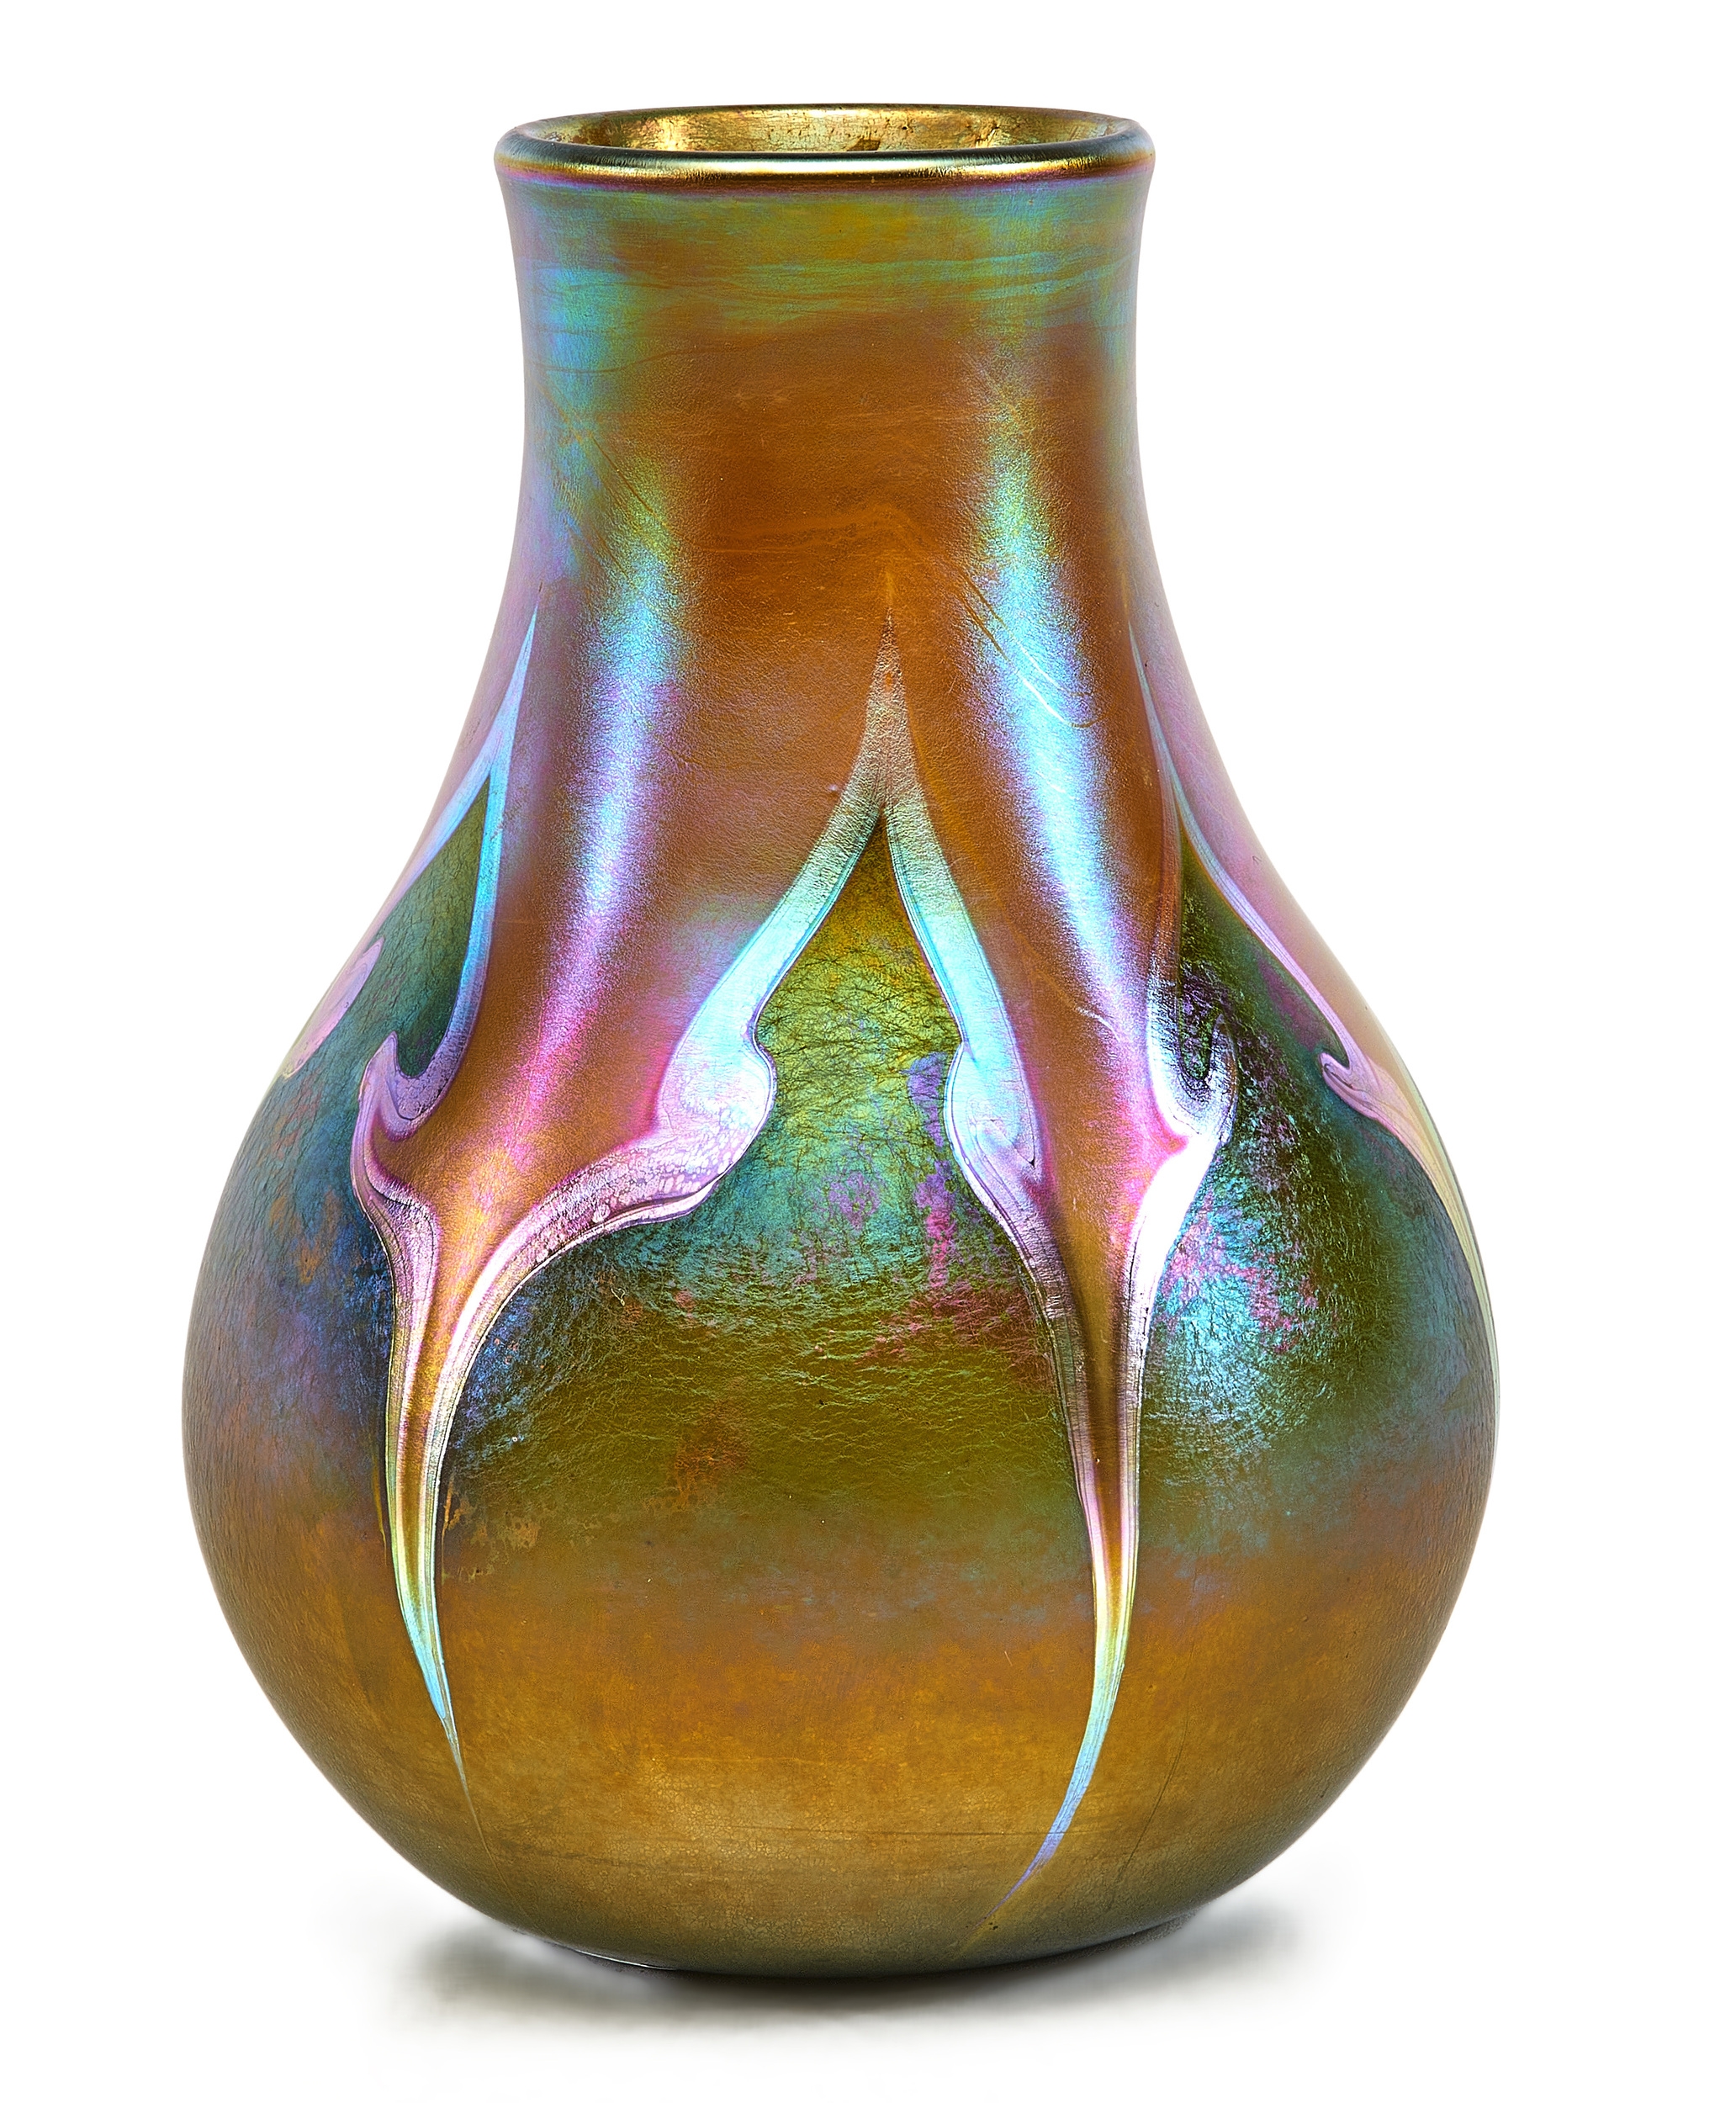 Designed by Louis C. Tiffany, Vase, American